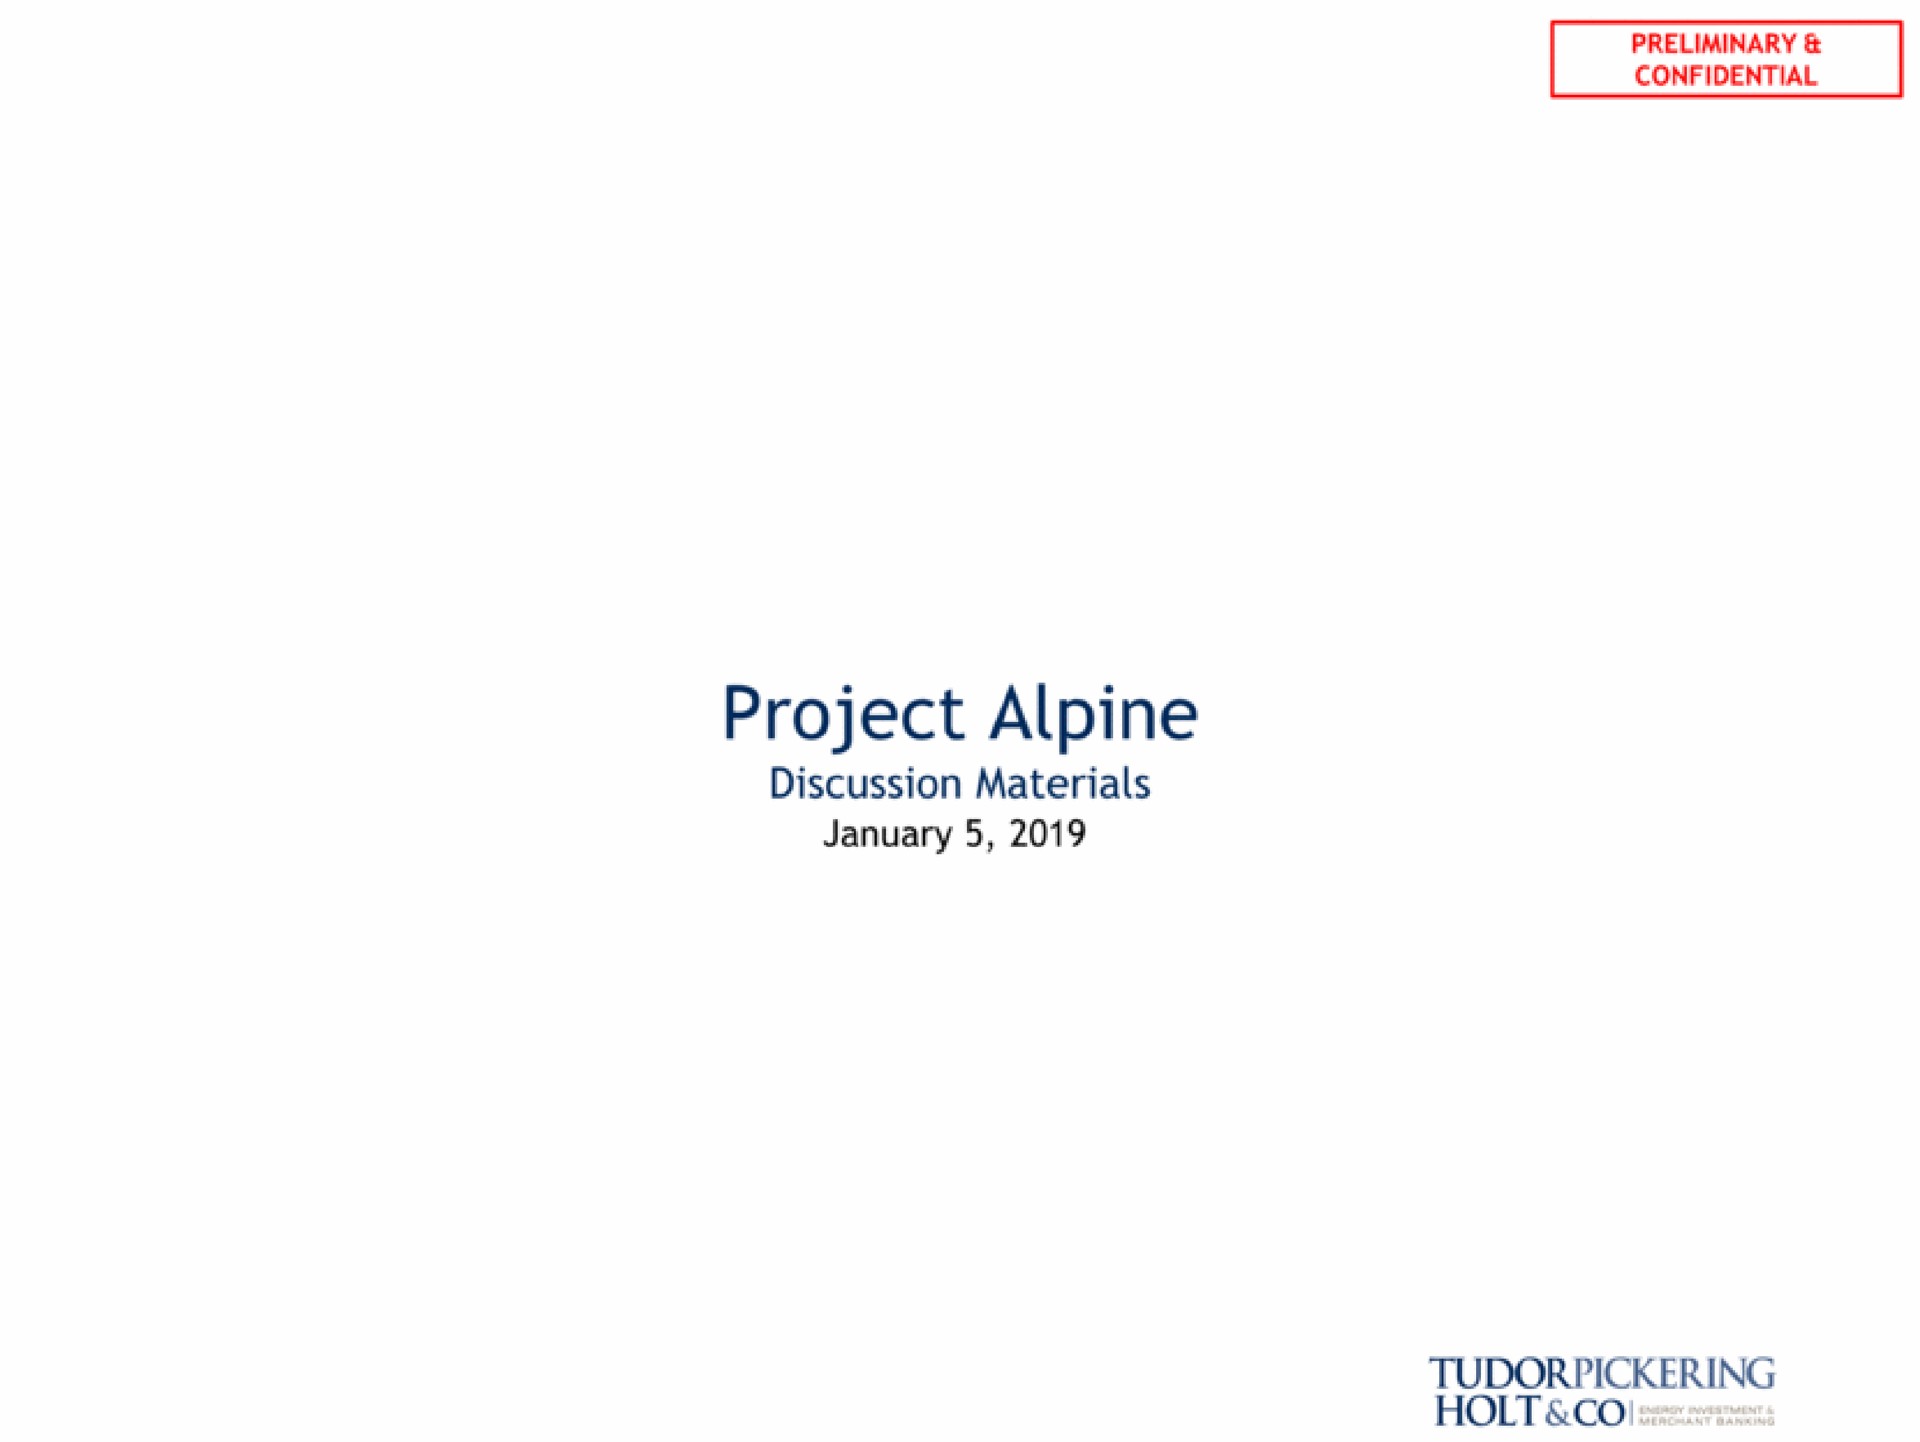 project alpine discussion materials holt | Tudor, Pickering, Holt & Co